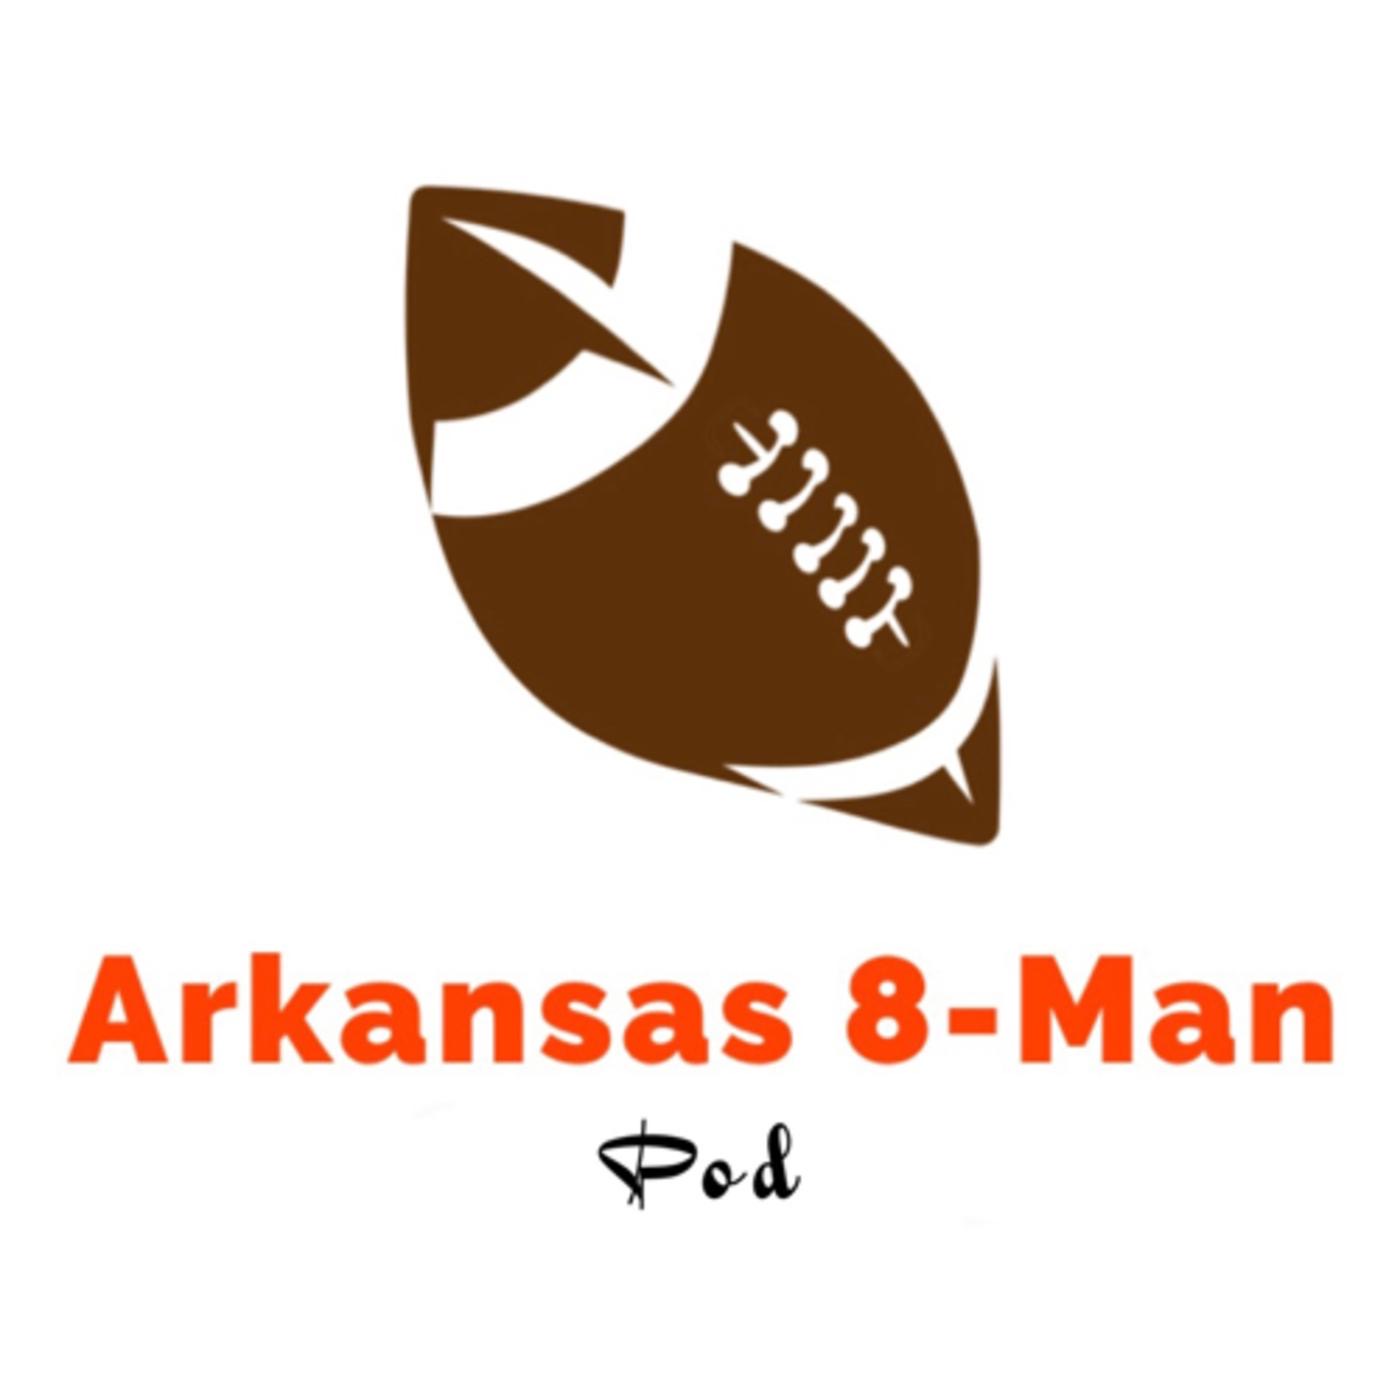 Arkansas 8-Man Pod Episode 2